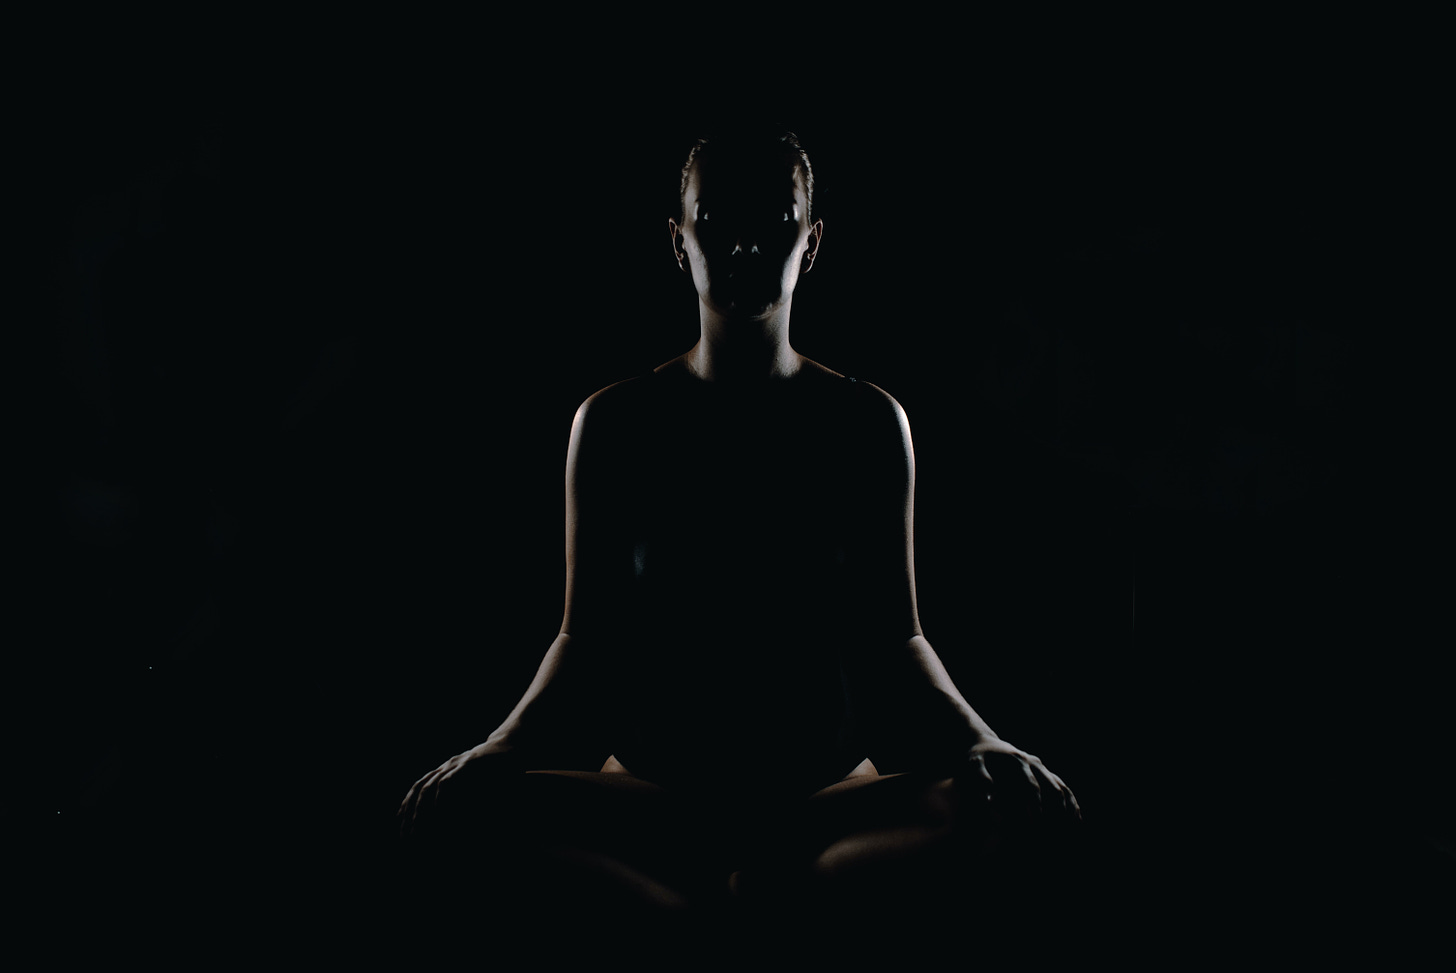 meditation in the dark